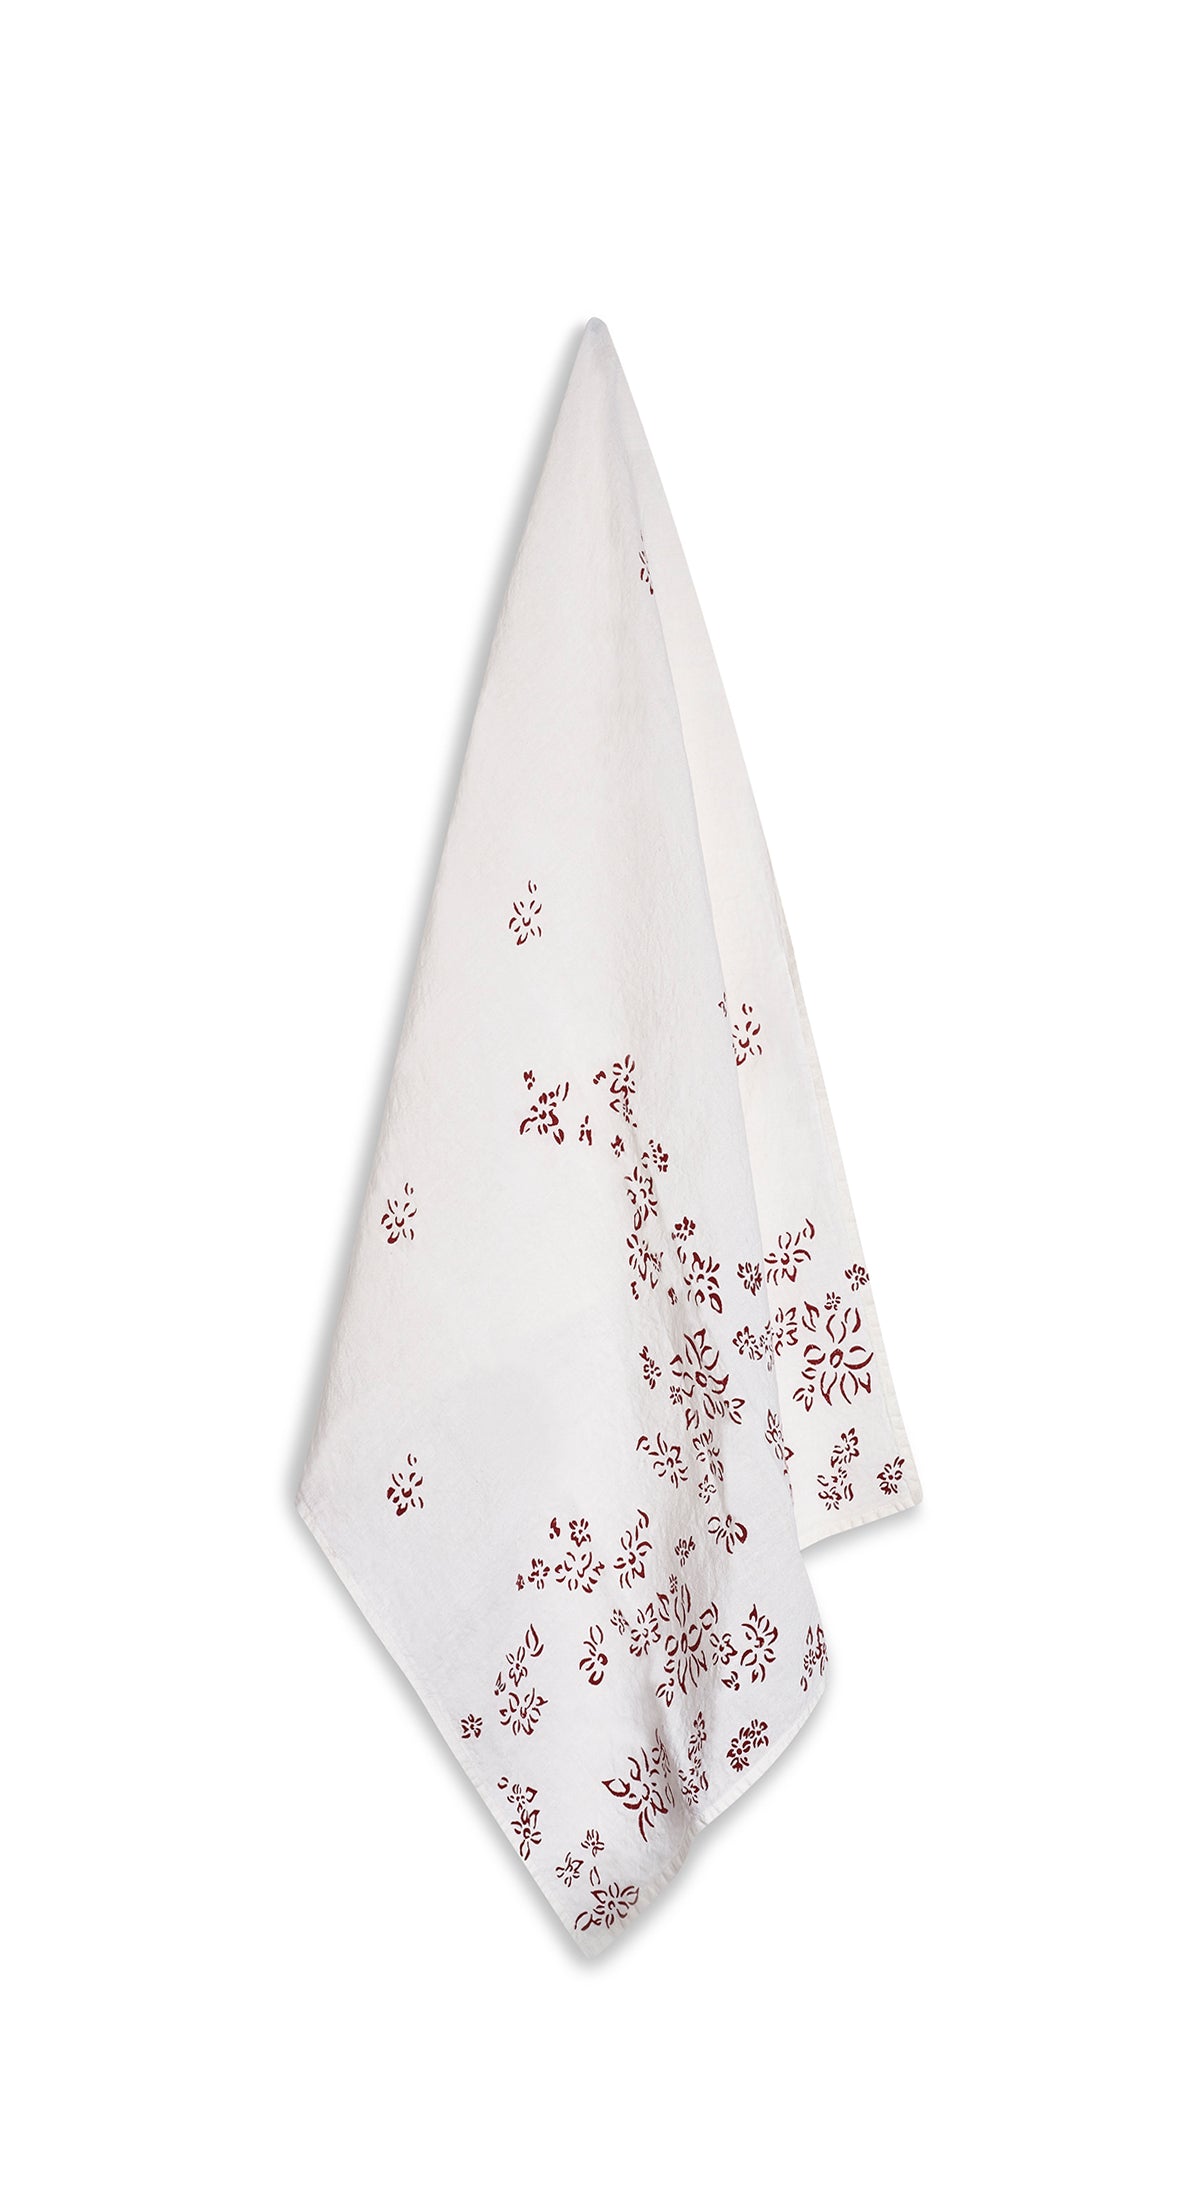 Bernadette's Hand Stamped Falling Flower Linen Tea Towel in Claret Red, 55x70cm